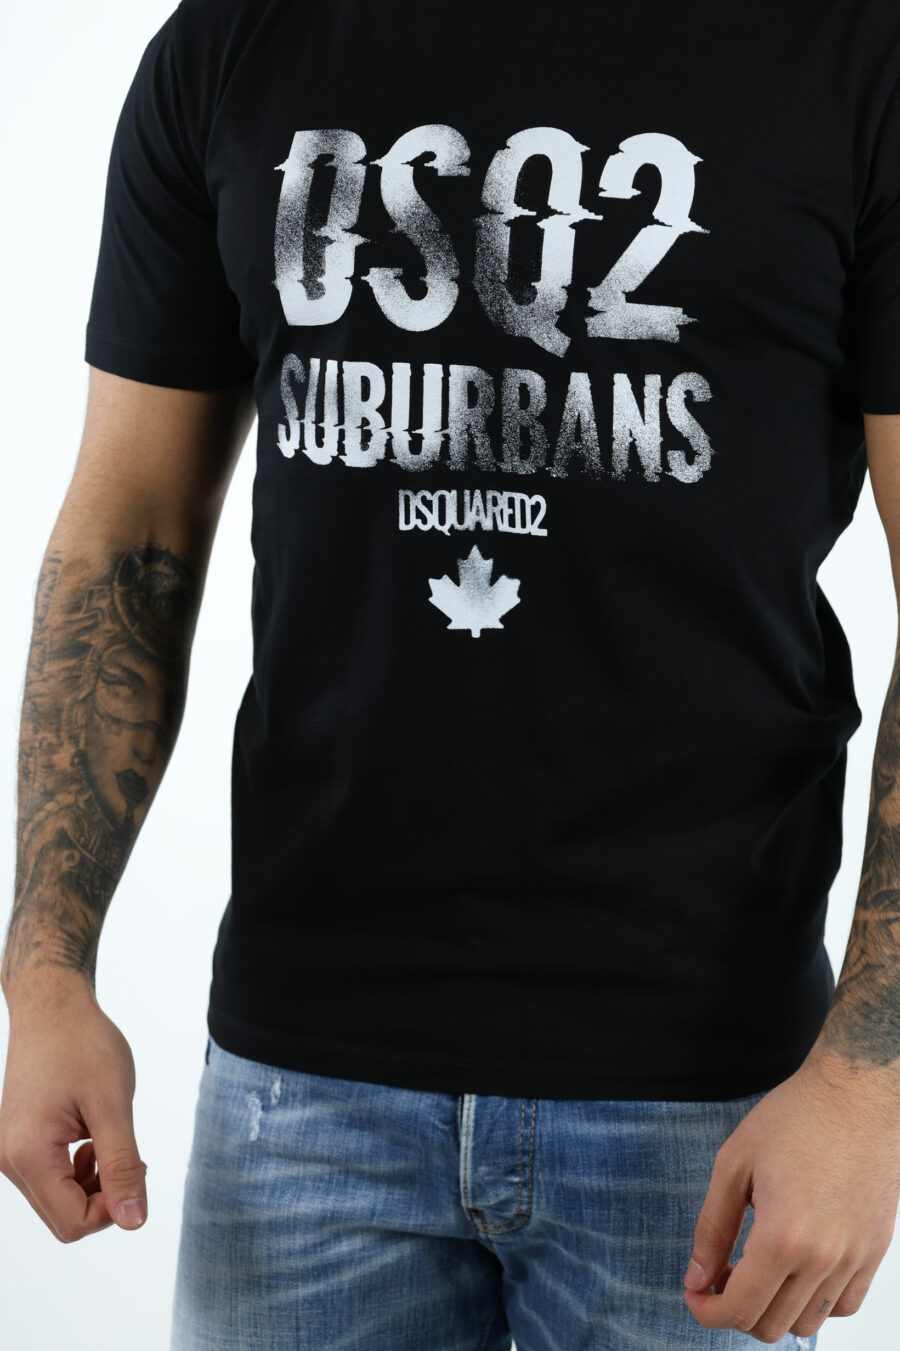 Schwarzes T-Shirt mit weißem "suburbans" Maxilogo - 106889